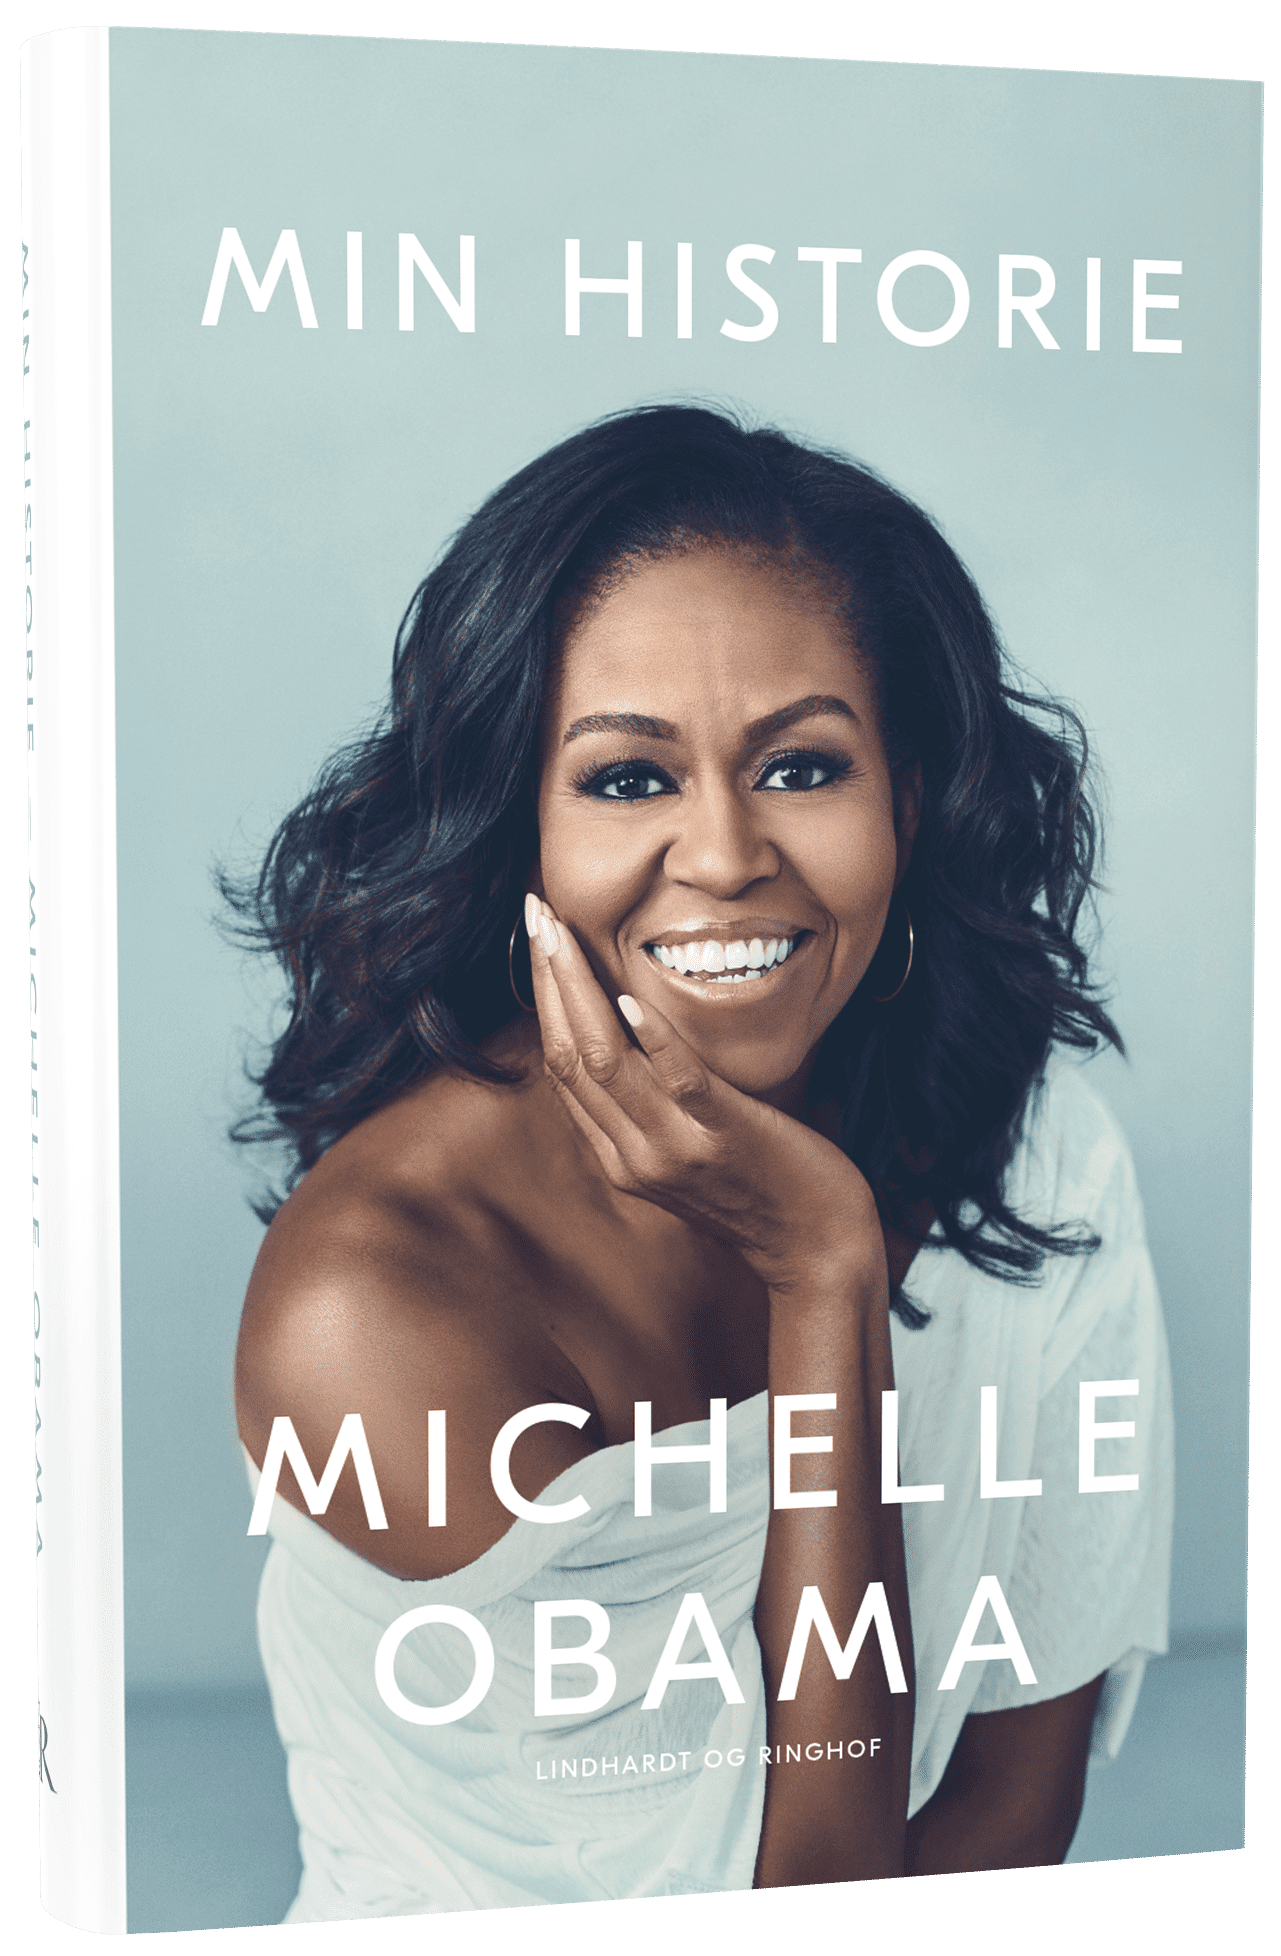 Min historie, Michelle Obama, Obama, biografi, Becoming, 